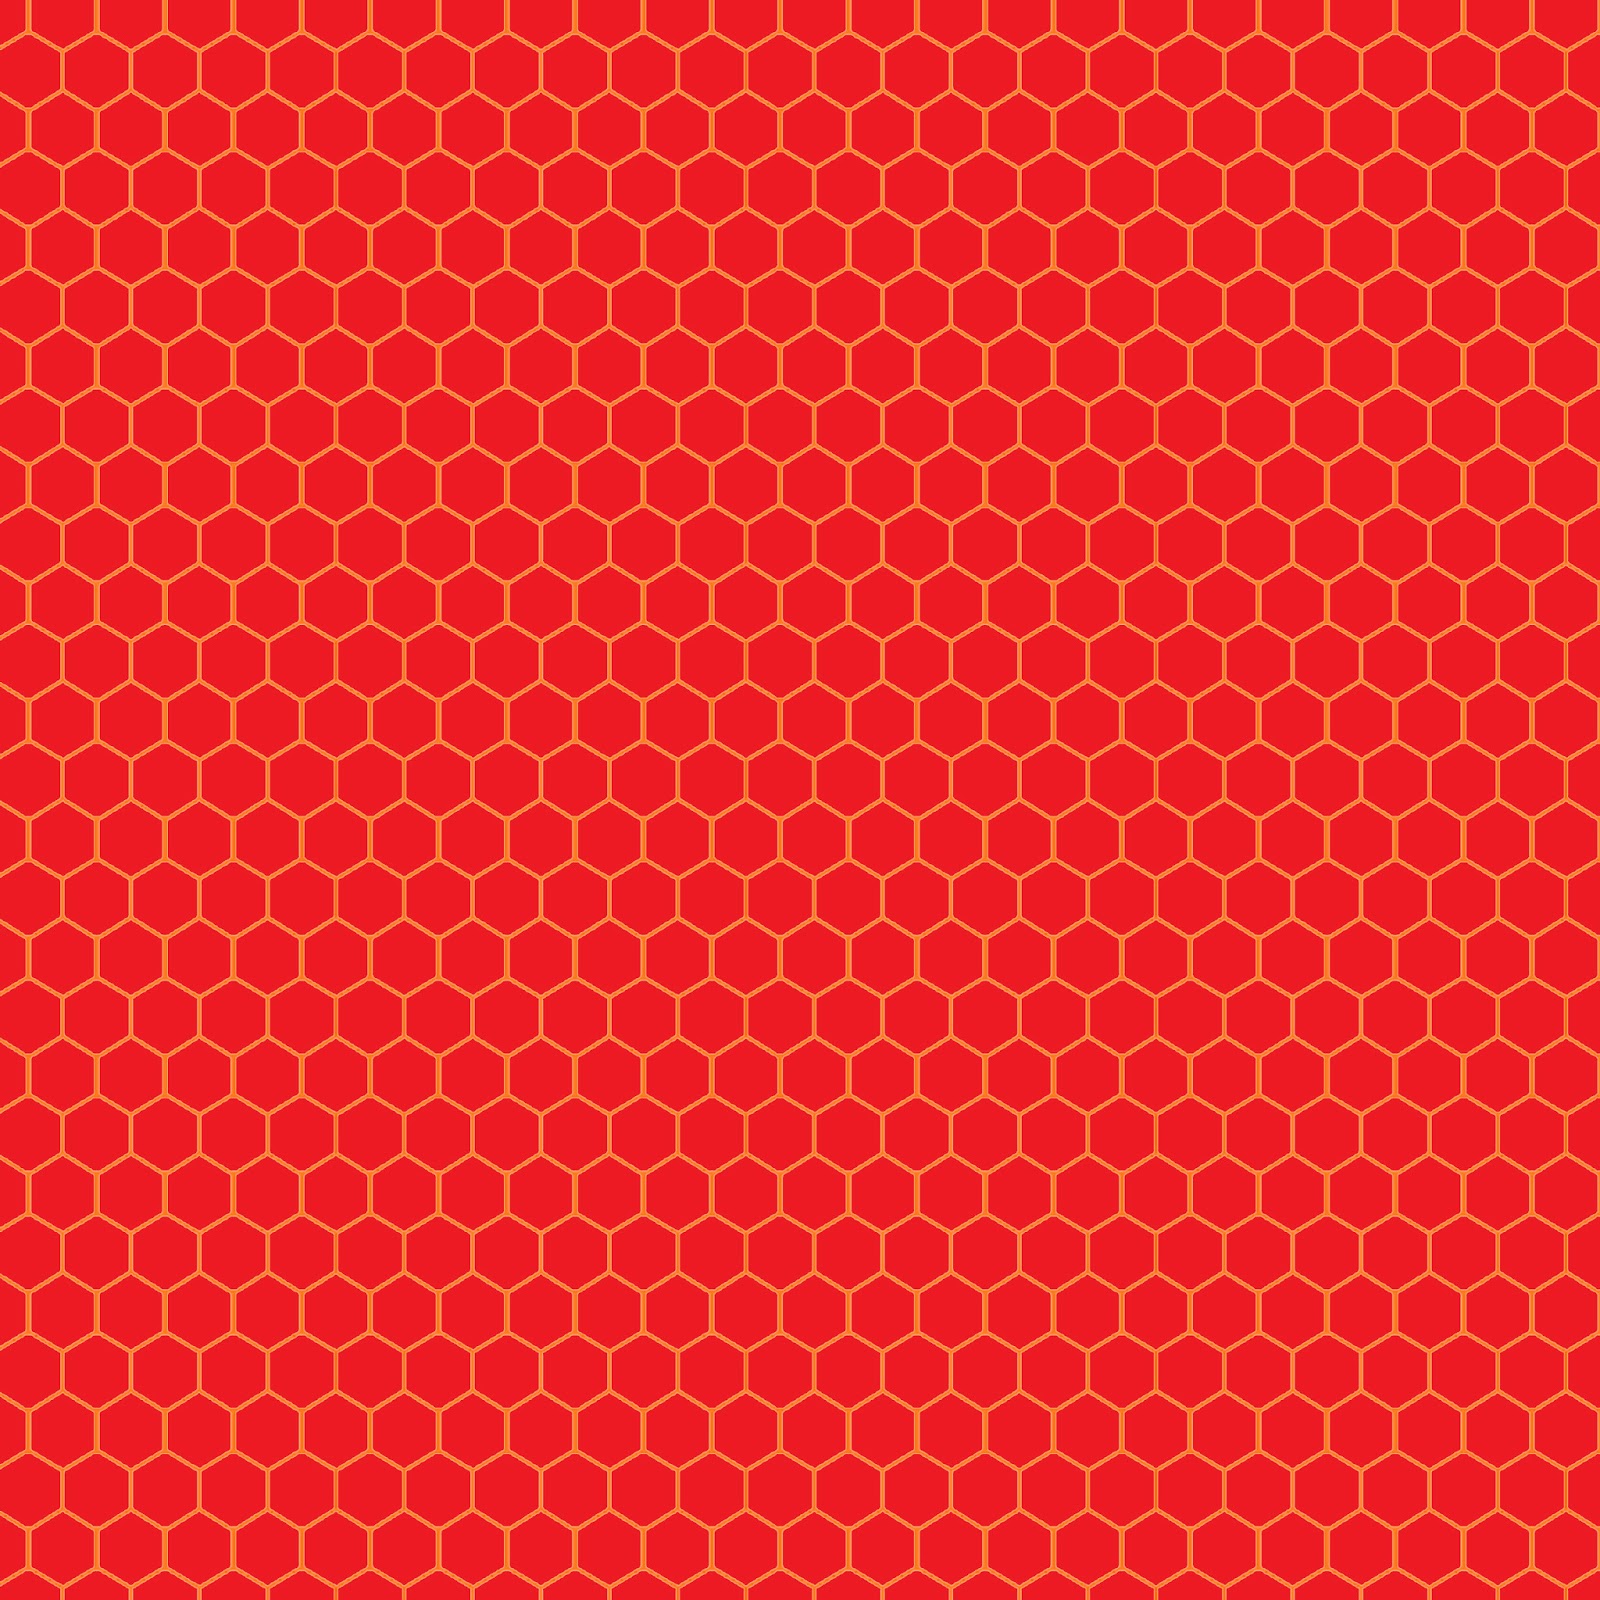 Doodlecraft: Hexagon Honeycomb FREEBIE background pattern of Awesomeness!